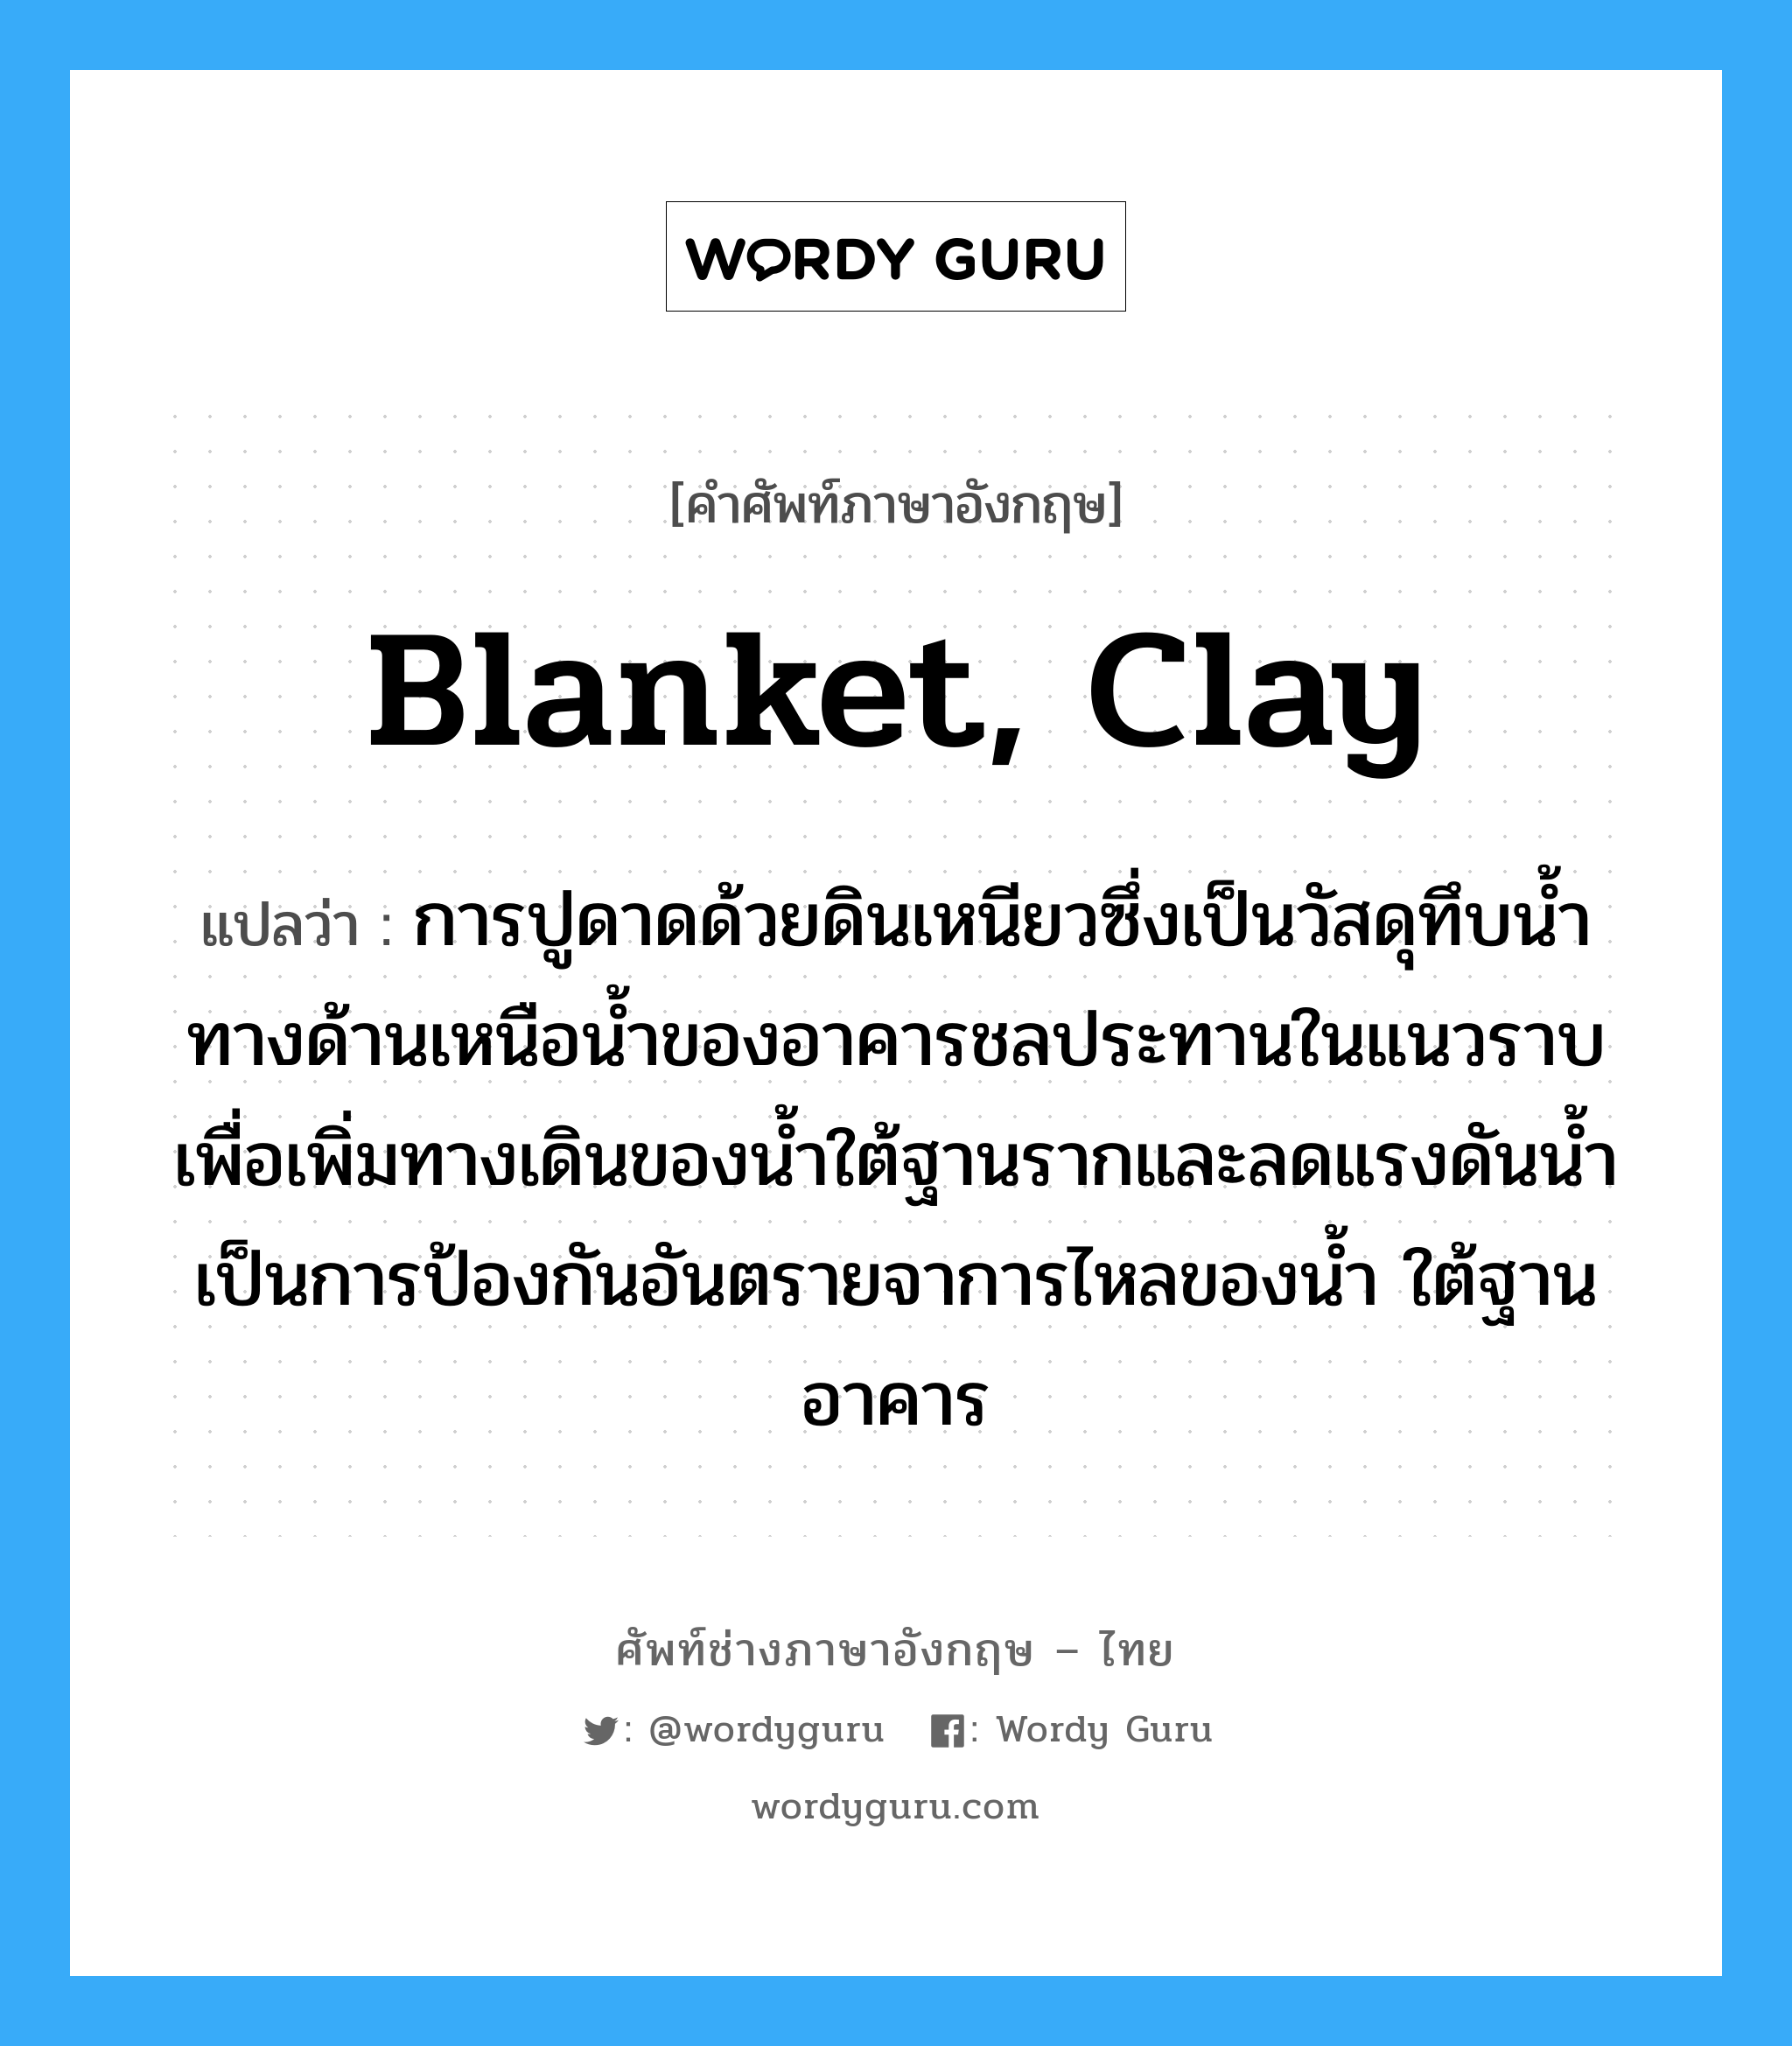 blanket, clay แปลว่า?, คำศัพท์ช่างภาษาอังกฤษ - ไทย blanket, clay คำศัพท์ภาษาอังกฤษ blanket, clay แปลว่า การปูดาดด้วยดินเหนียวซึ่งเป็นวัสดุทึบน้ำทางด้านเหนือน้ำของอาคารชลประทานในแนวราบเพื่อเพิ่มทางเดินของน้ำใต้ฐานรากและลดแรงดันน้ำ เป็นการป้องกันอันตรายจาการไหลของน้ำ ใต้ฐานอาคาร